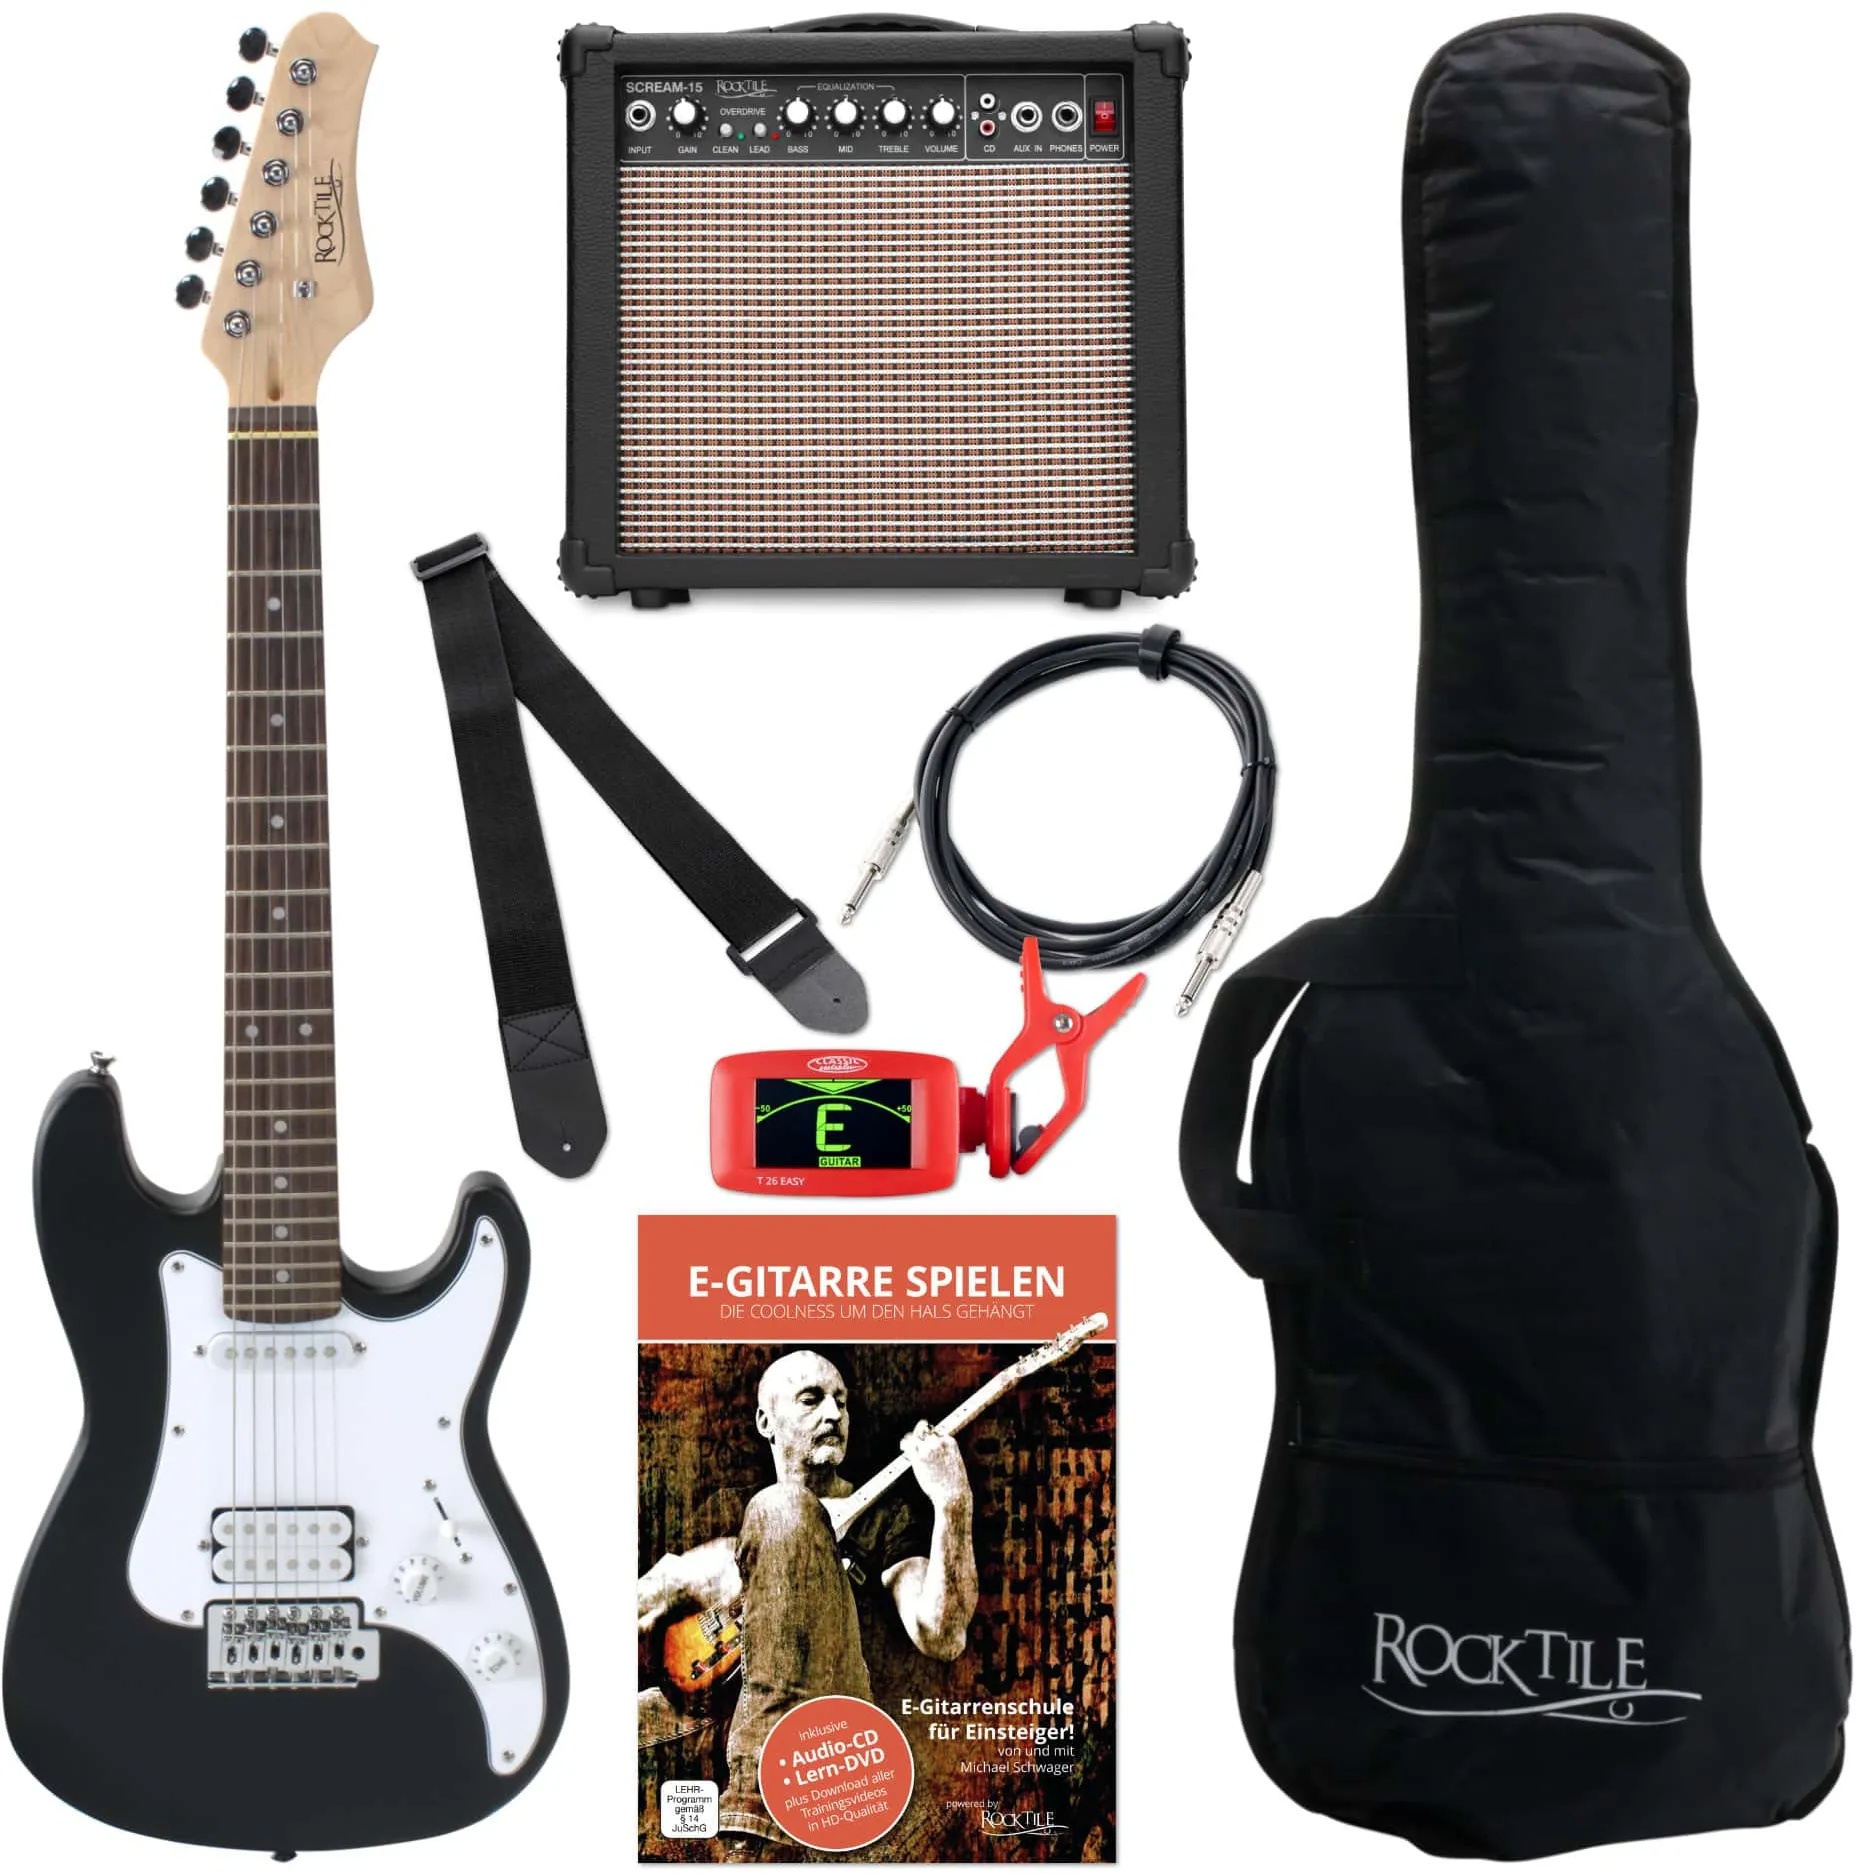 Rocktile Sphere Junior E-Gitarre 3/4 Schwarz Set inkl. Verstärker, Stimmgerät, Kabel, Gurt und Schule inkl. CD/DVD